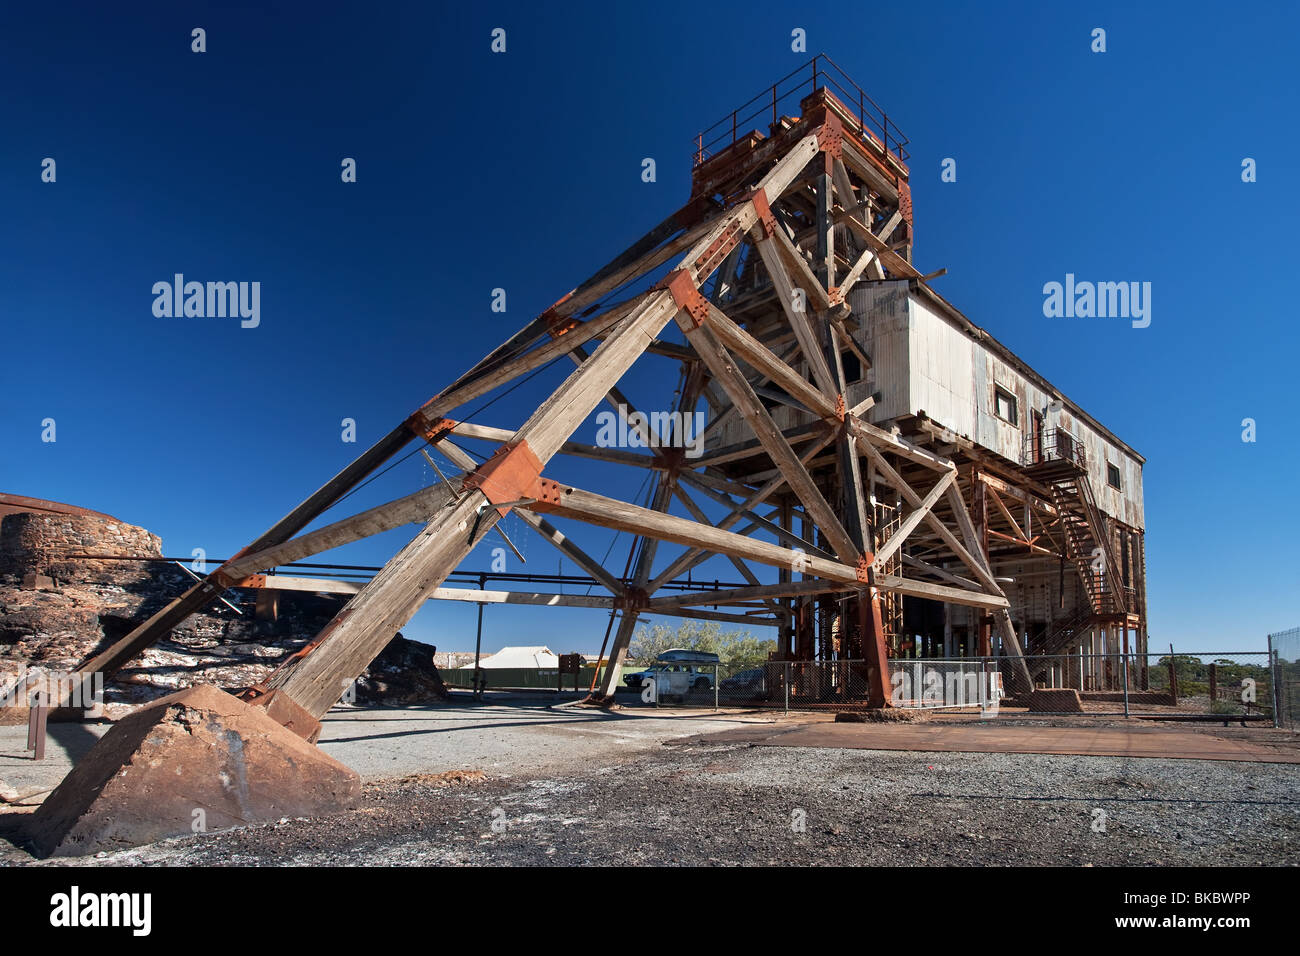 Jonction Broken Hill Mine abandonnée en in New South Wales Australie Banque D'Images